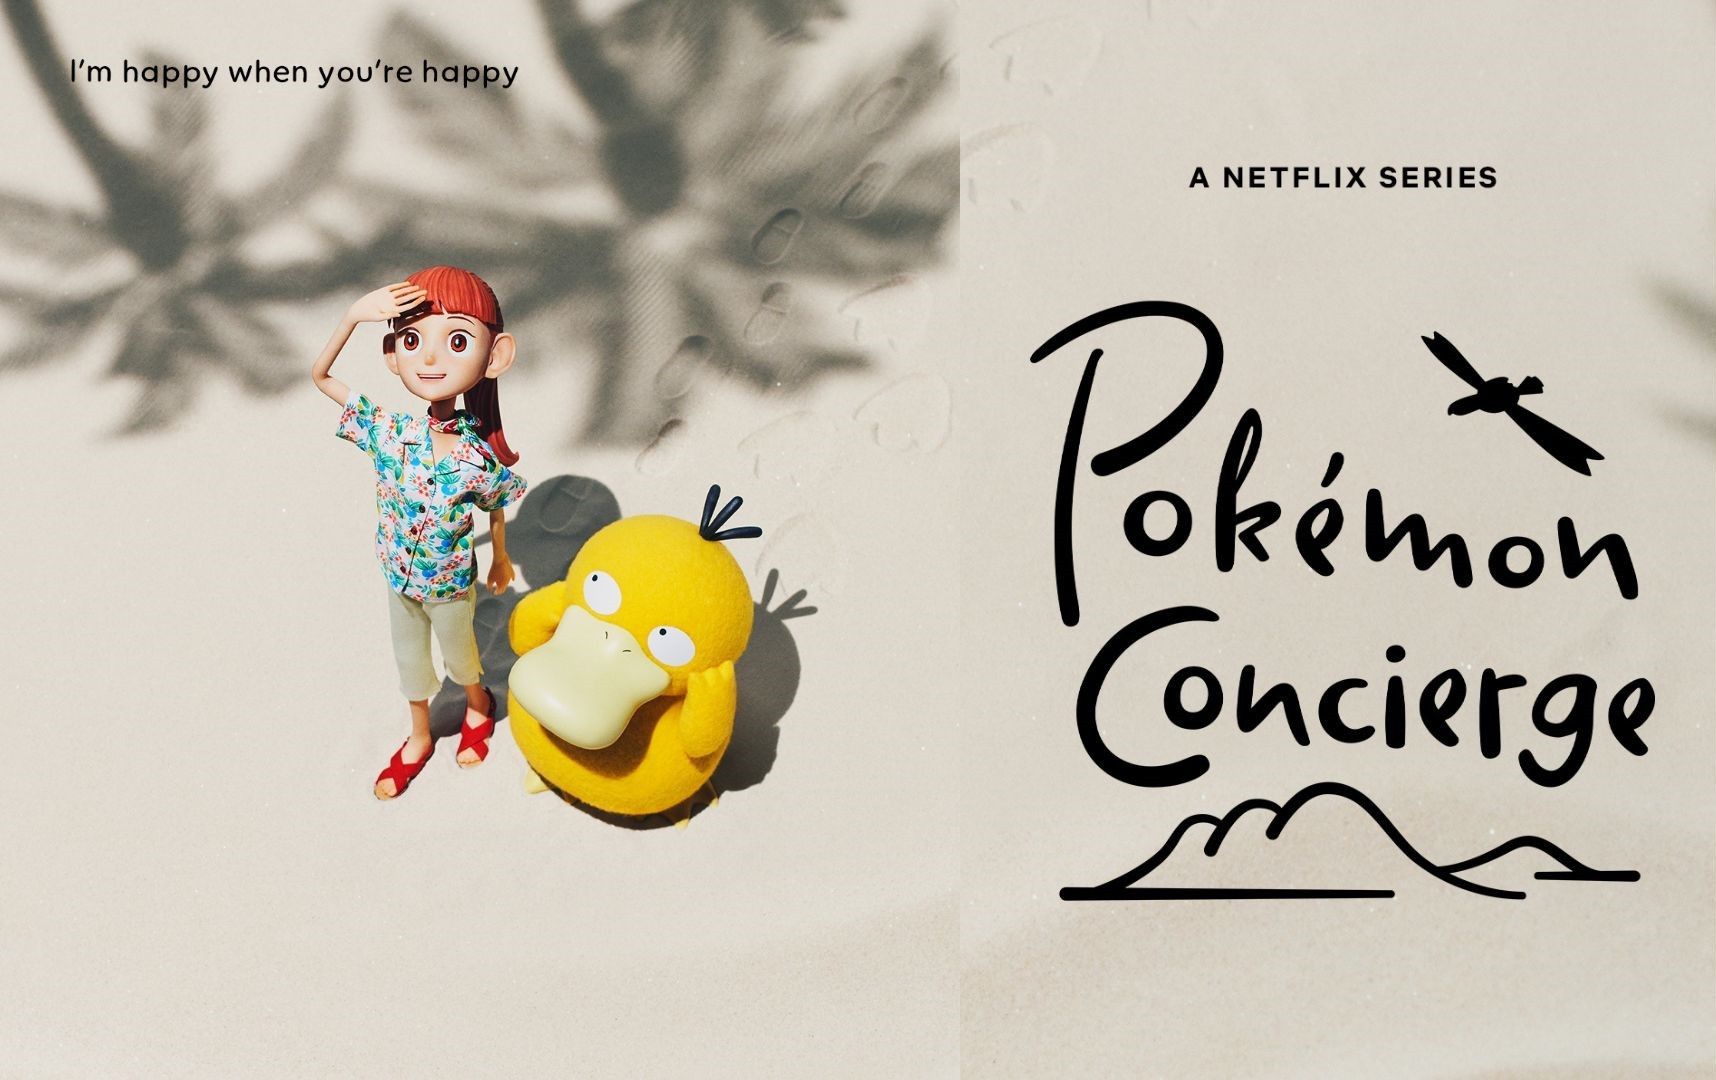 Netflix teases upcoming Pokémon stop-motion animated series 